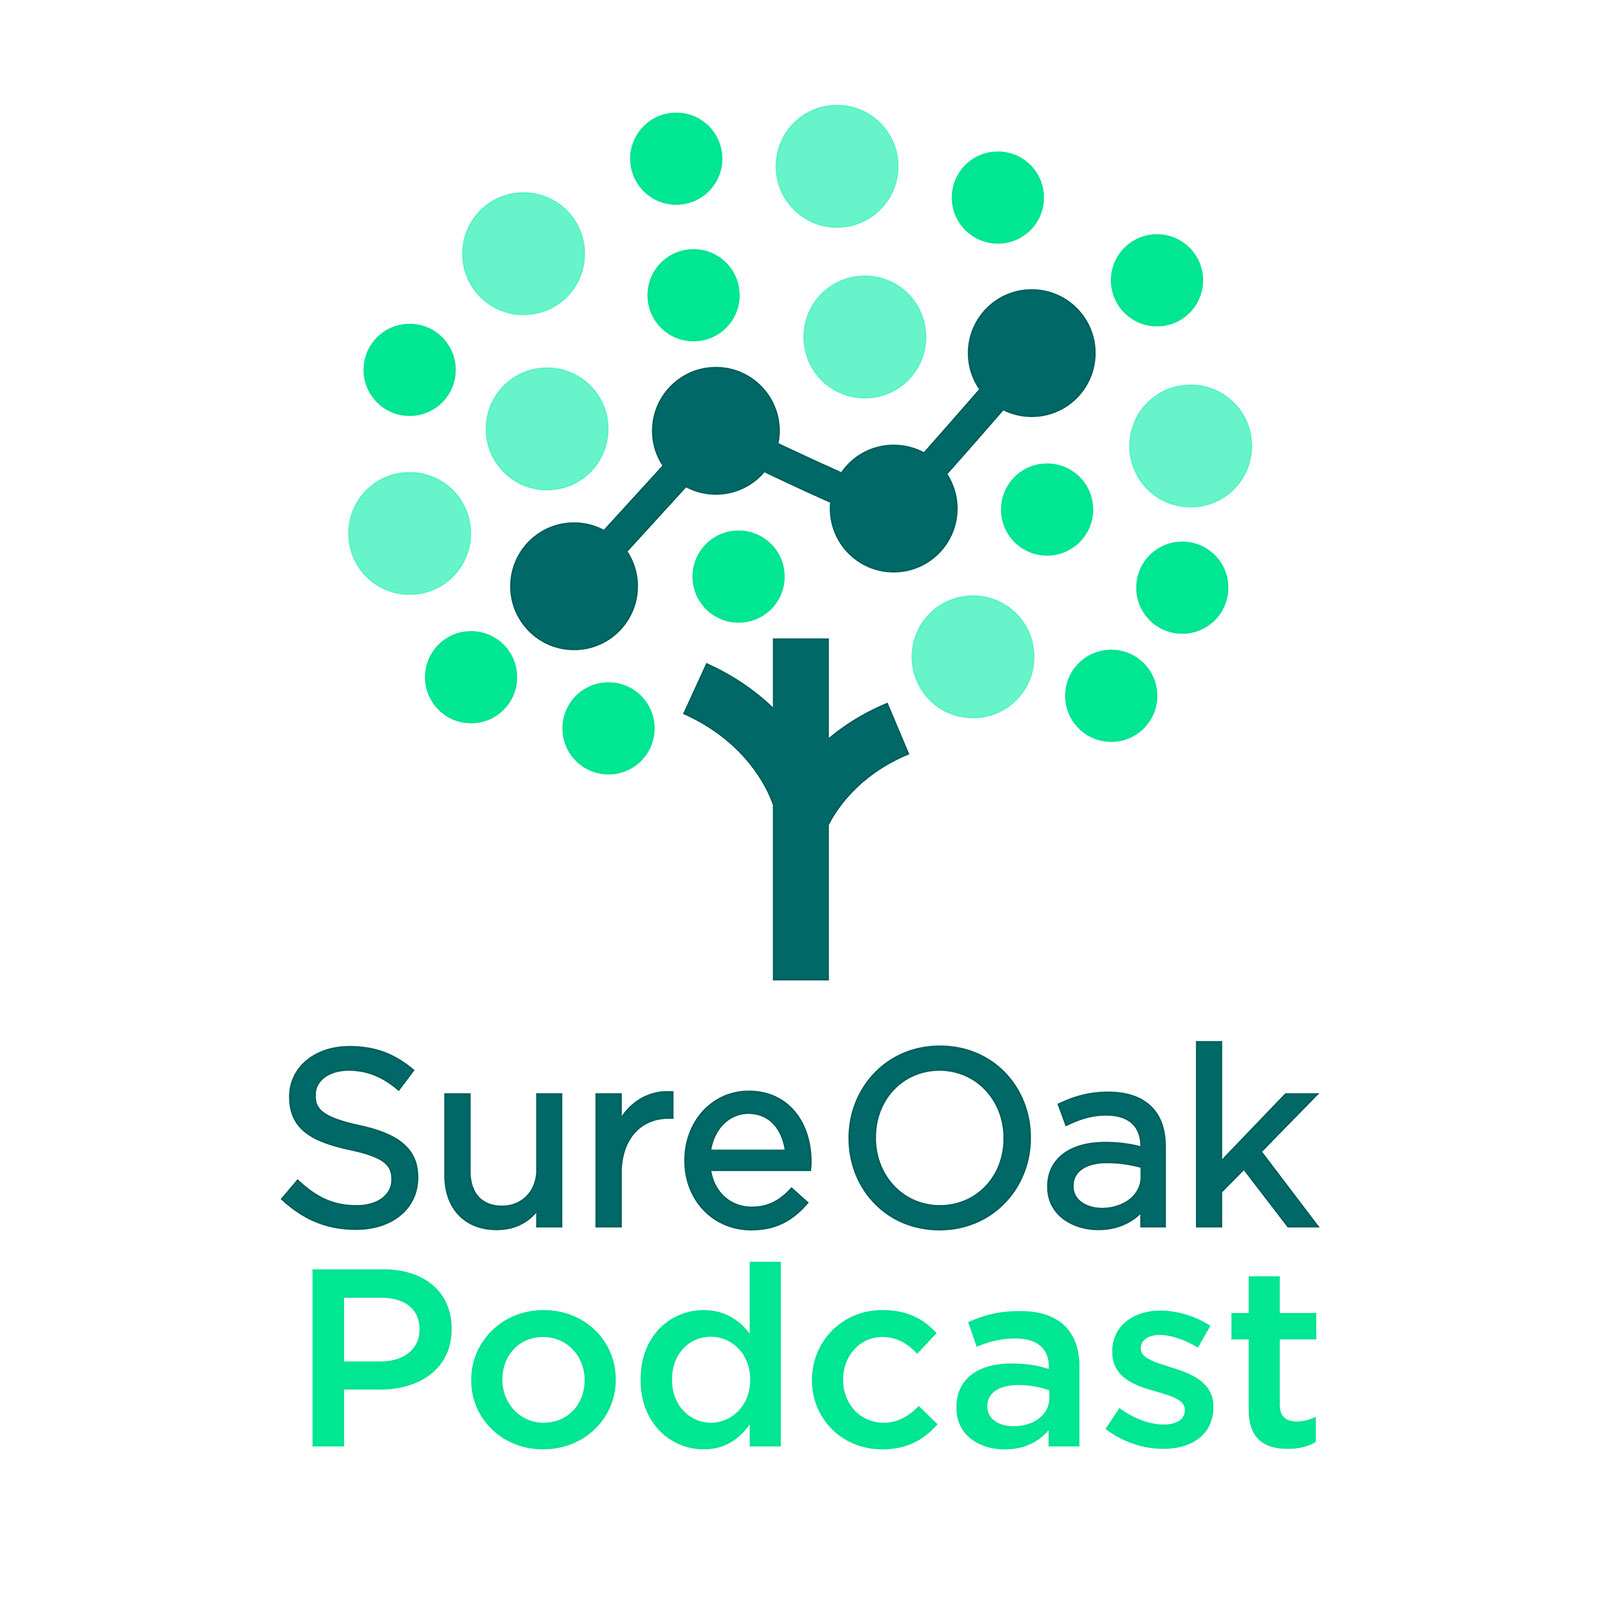 Sure Oak Podcast